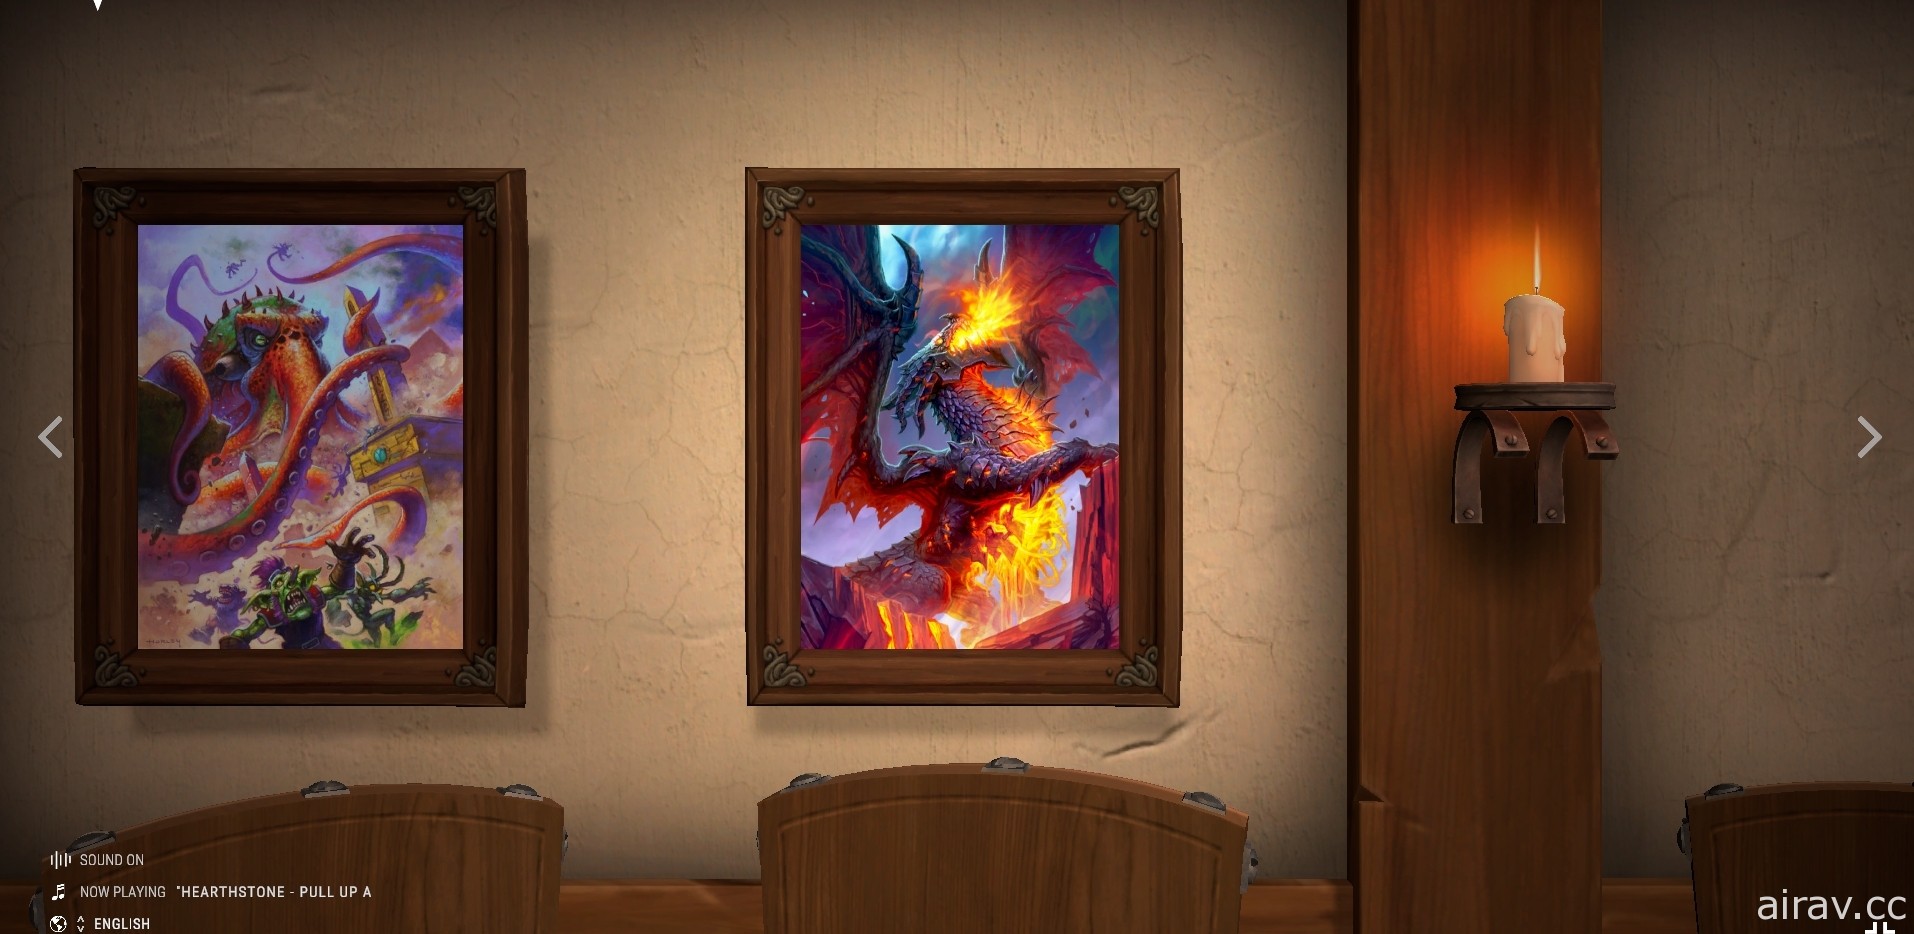 【BZ 20】Blizzard 打造“线上画廊” 搭配音乐欣赏美术图与 3D 模组